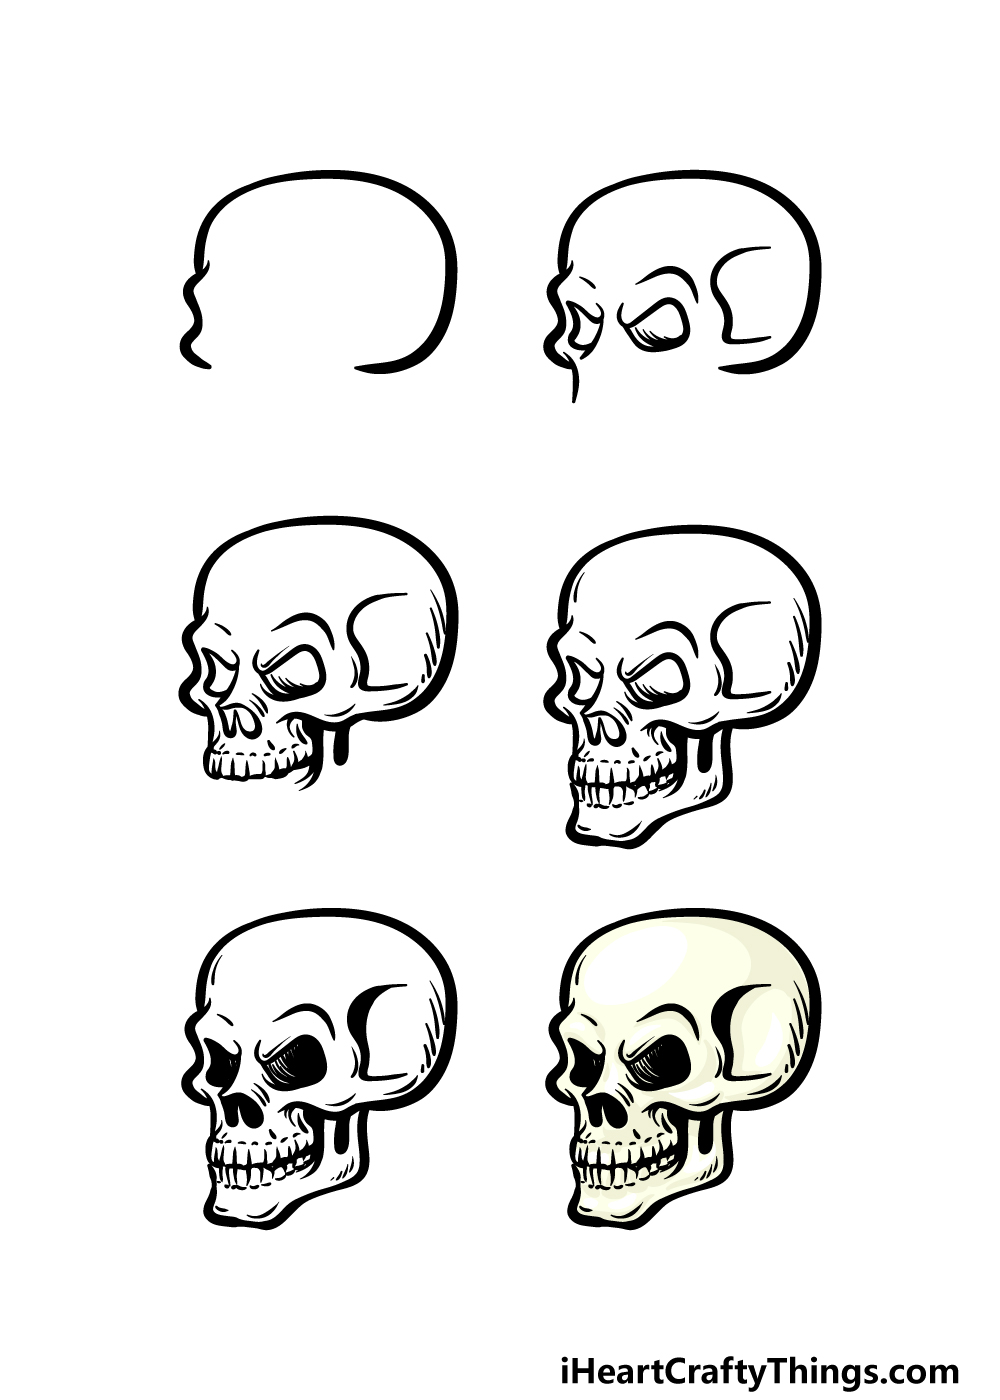 Cartoon Skull Drawing - How To Draw A Cartoon Skull Step By Step